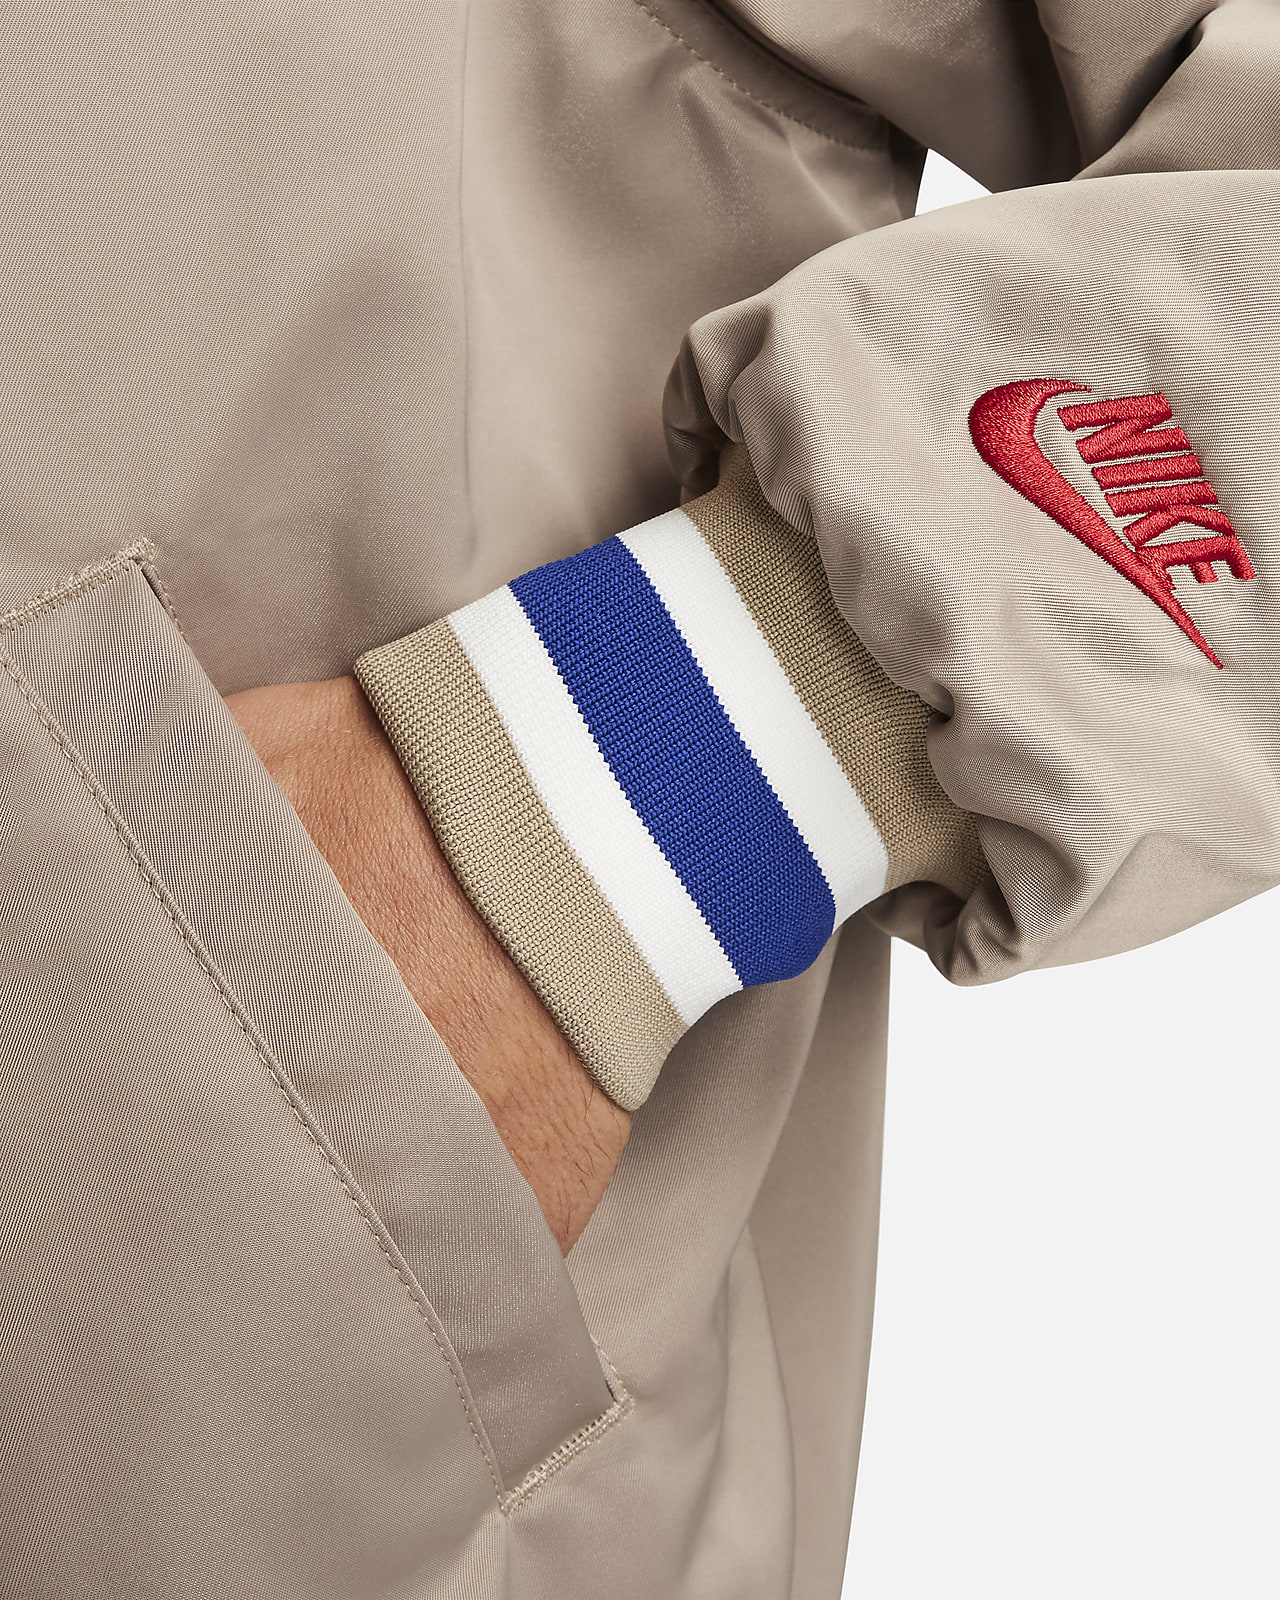 Nike Dugout Men's Baseball Jacket.